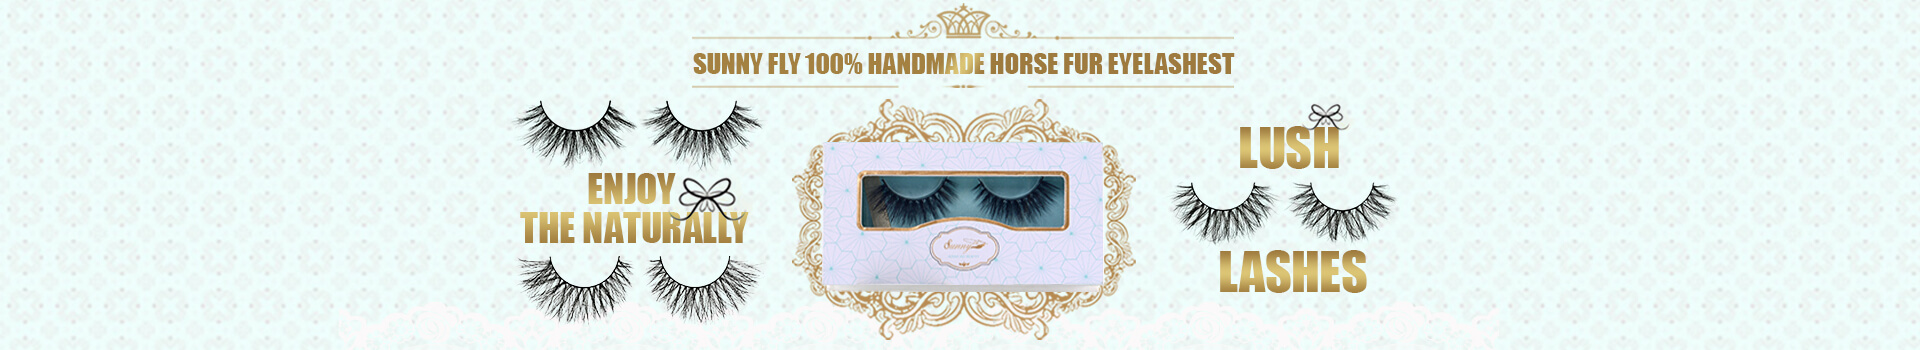 Real Horse Fur Eyesashes HF07